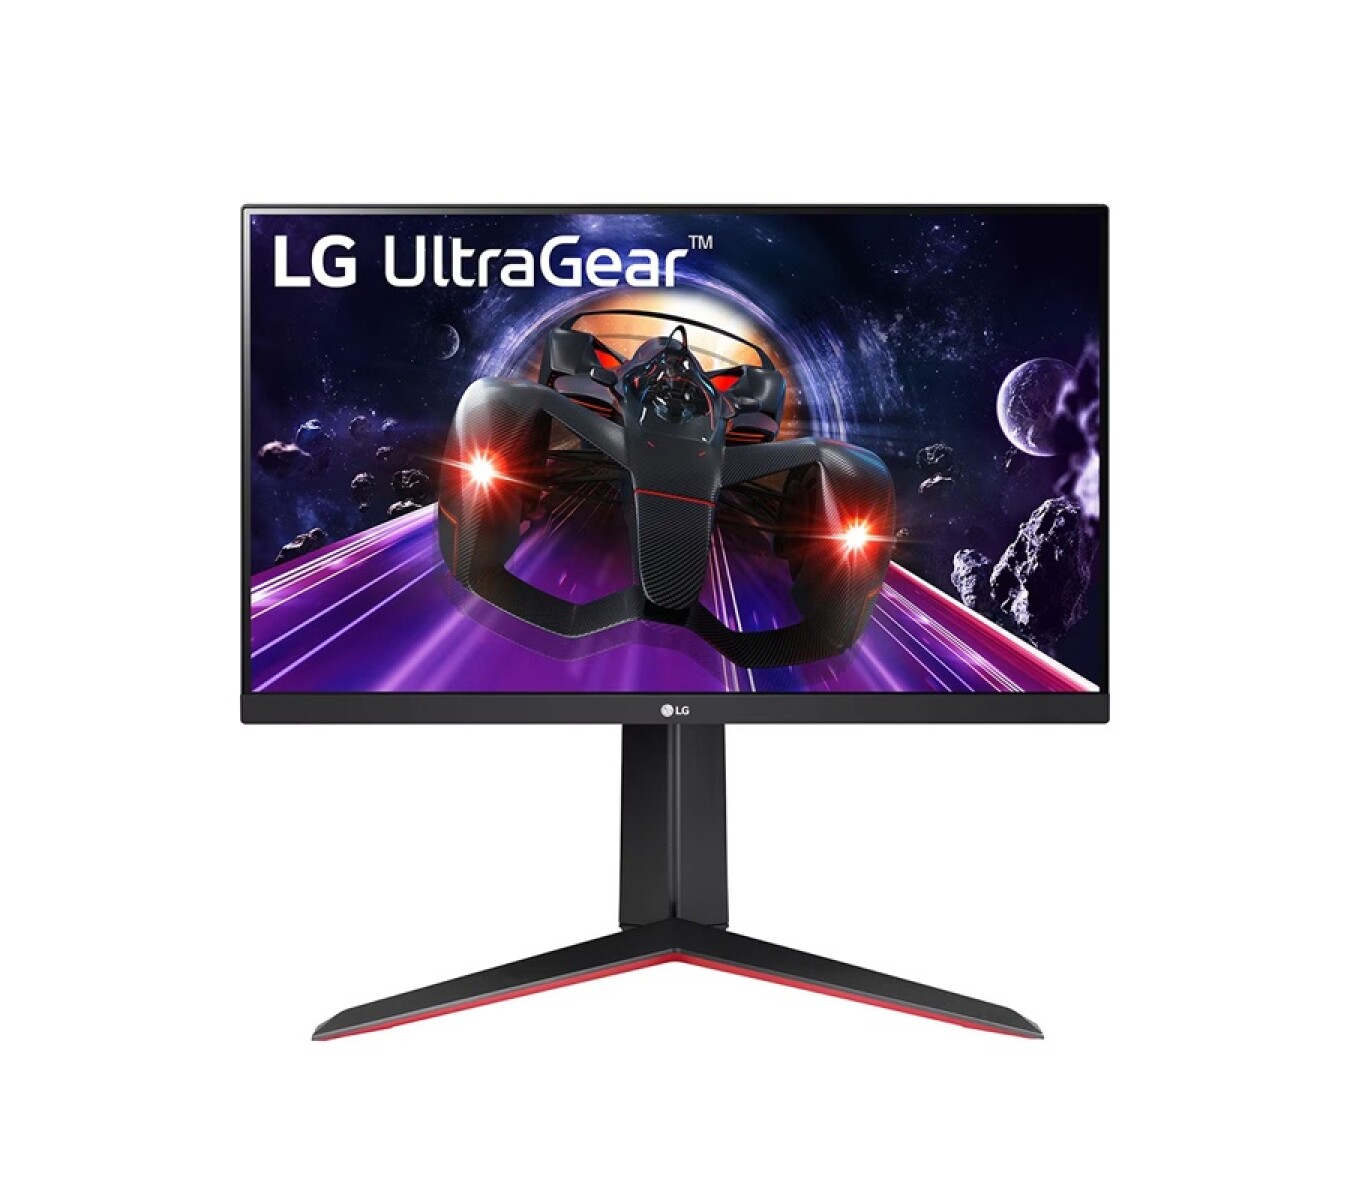 Monitor Gamer LG Ultra Gear 23.8" 24GN65R FHD 144Hz 1 Ms 